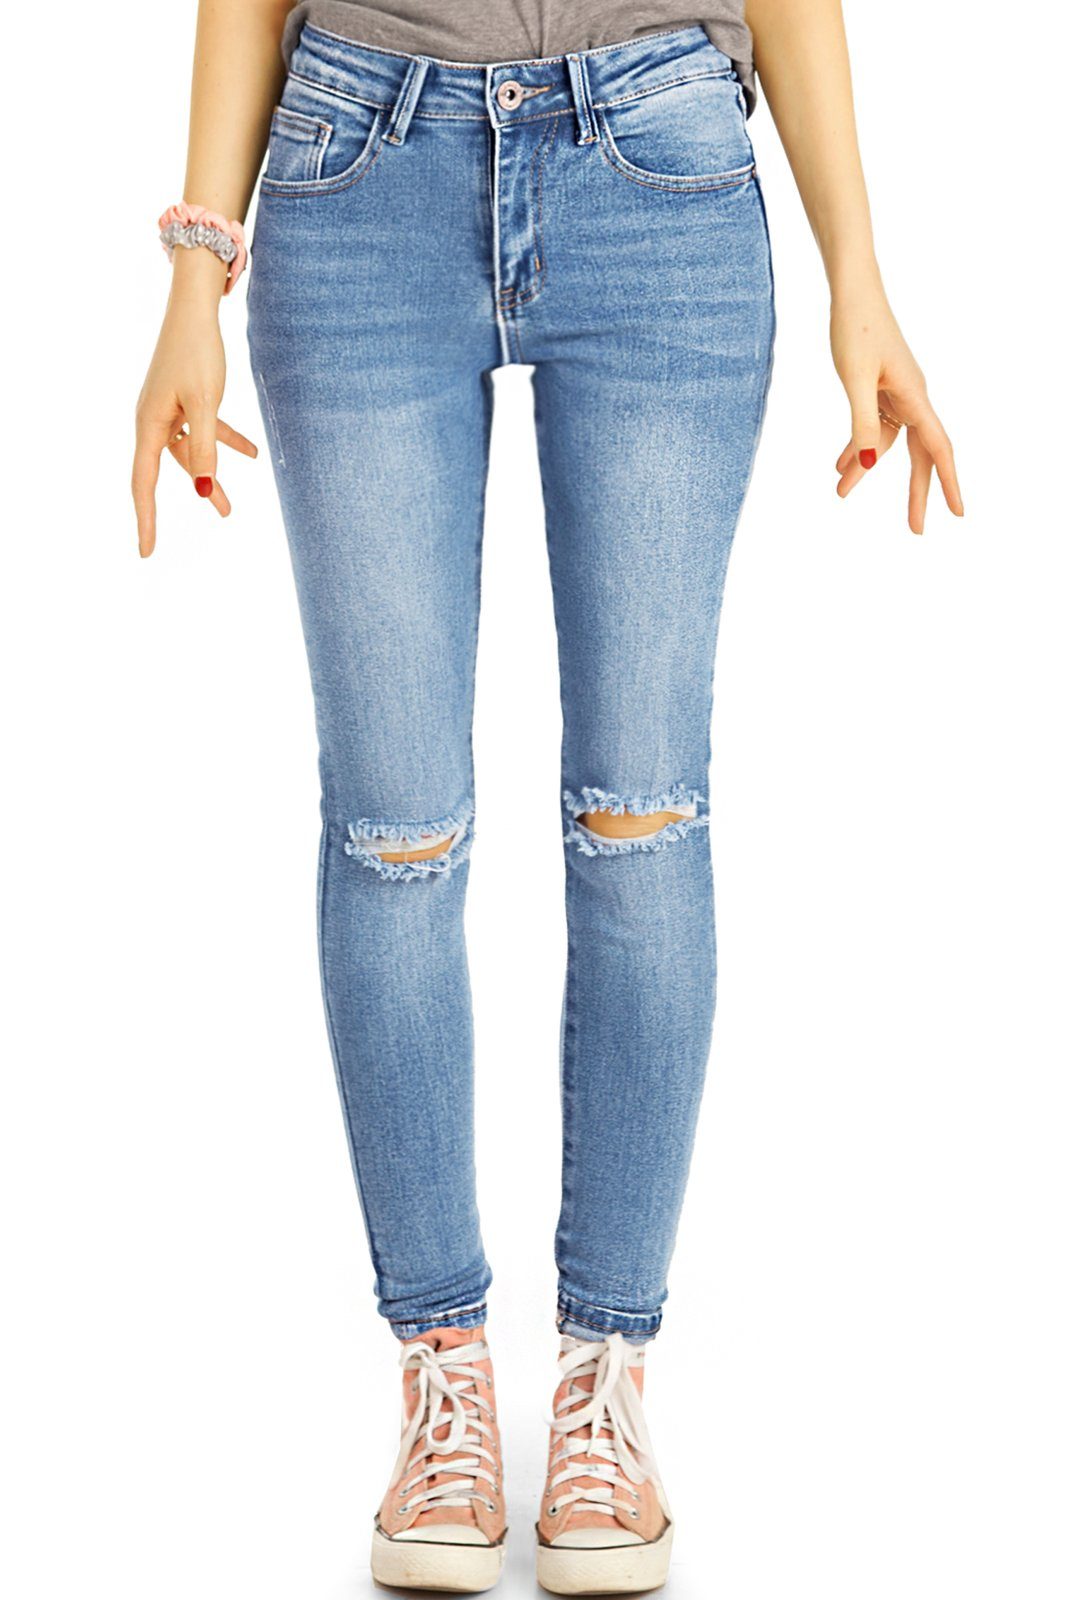 be styled Destroyed-Jeans Medium Waist Röhrenjeans, destroyed Skinny Hosen - Damen - j17f-1 5-Pocket-Style, mit Stretch-Anteil